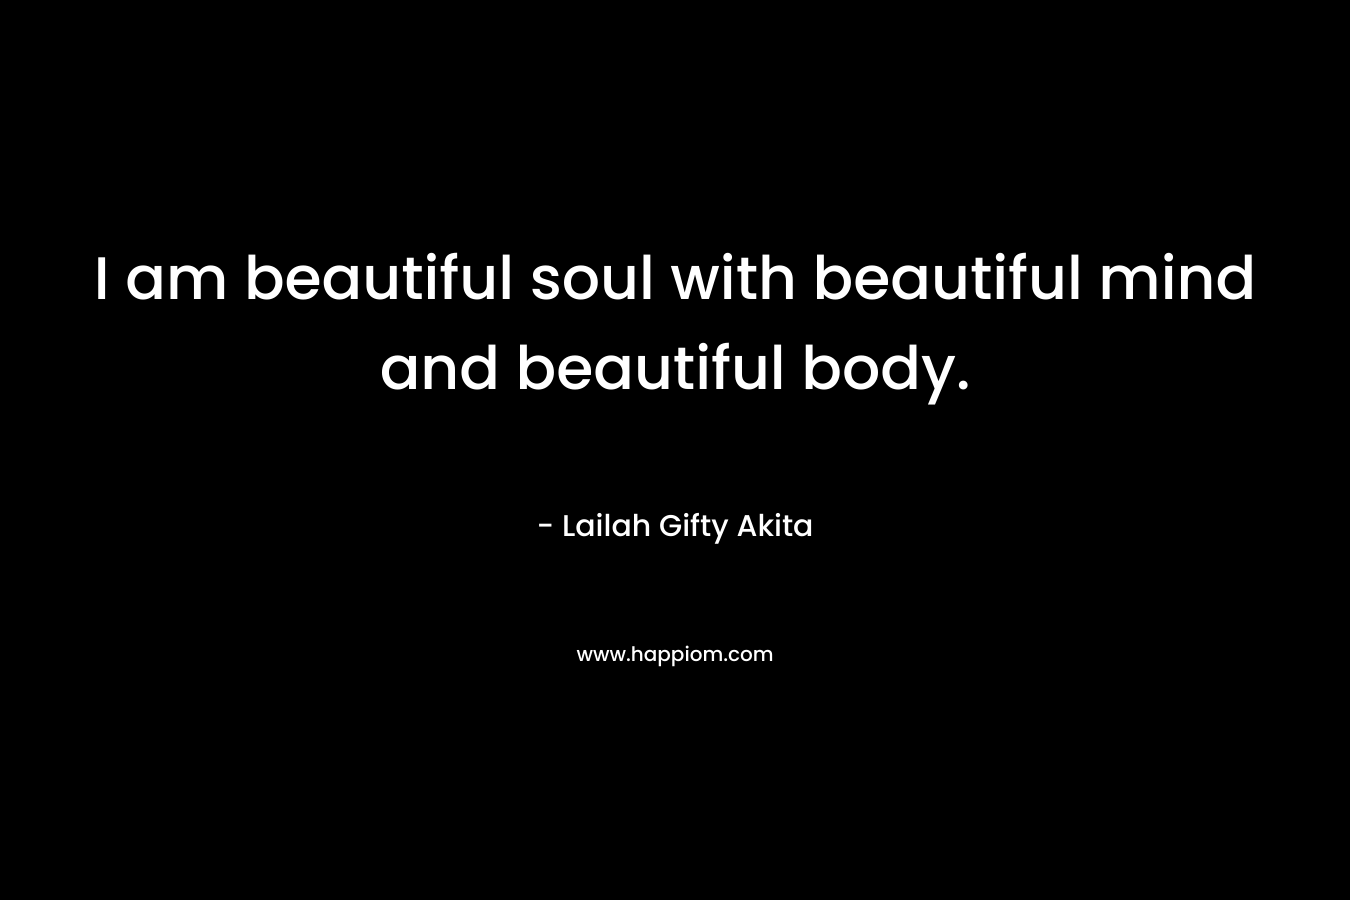 I am beautiful soul with beautiful mind and beautiful body.